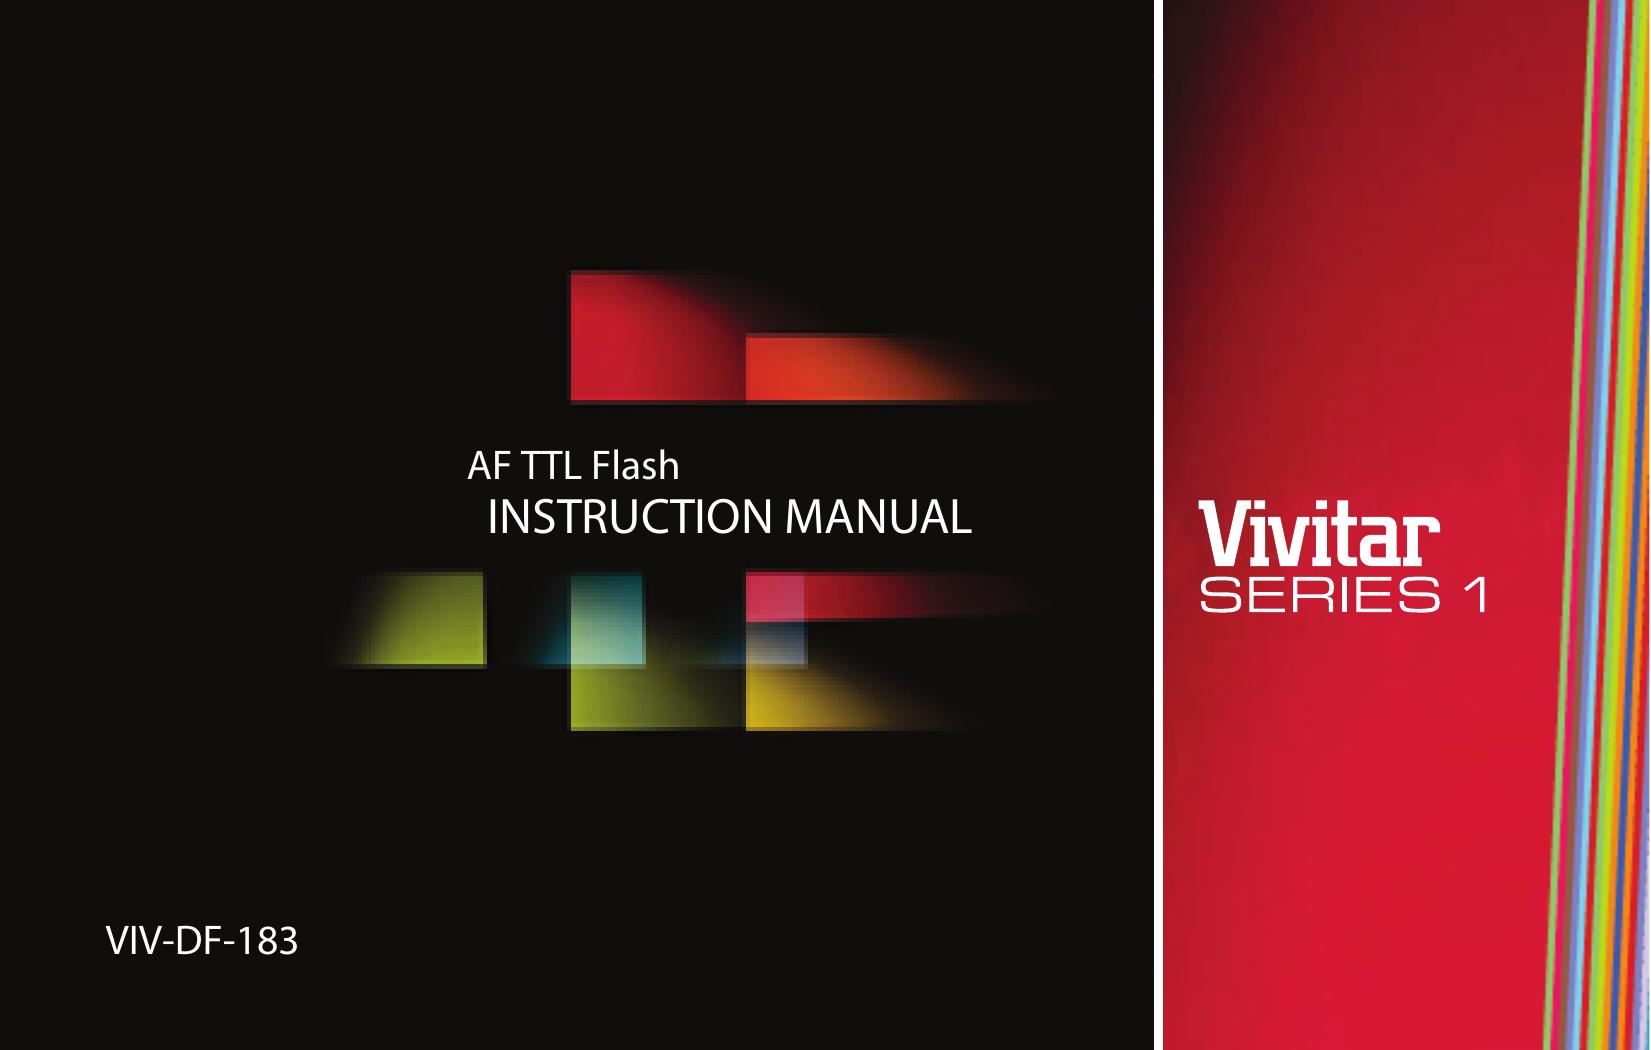 Vivitar VIV-DF-183 Camera Flash User Manual